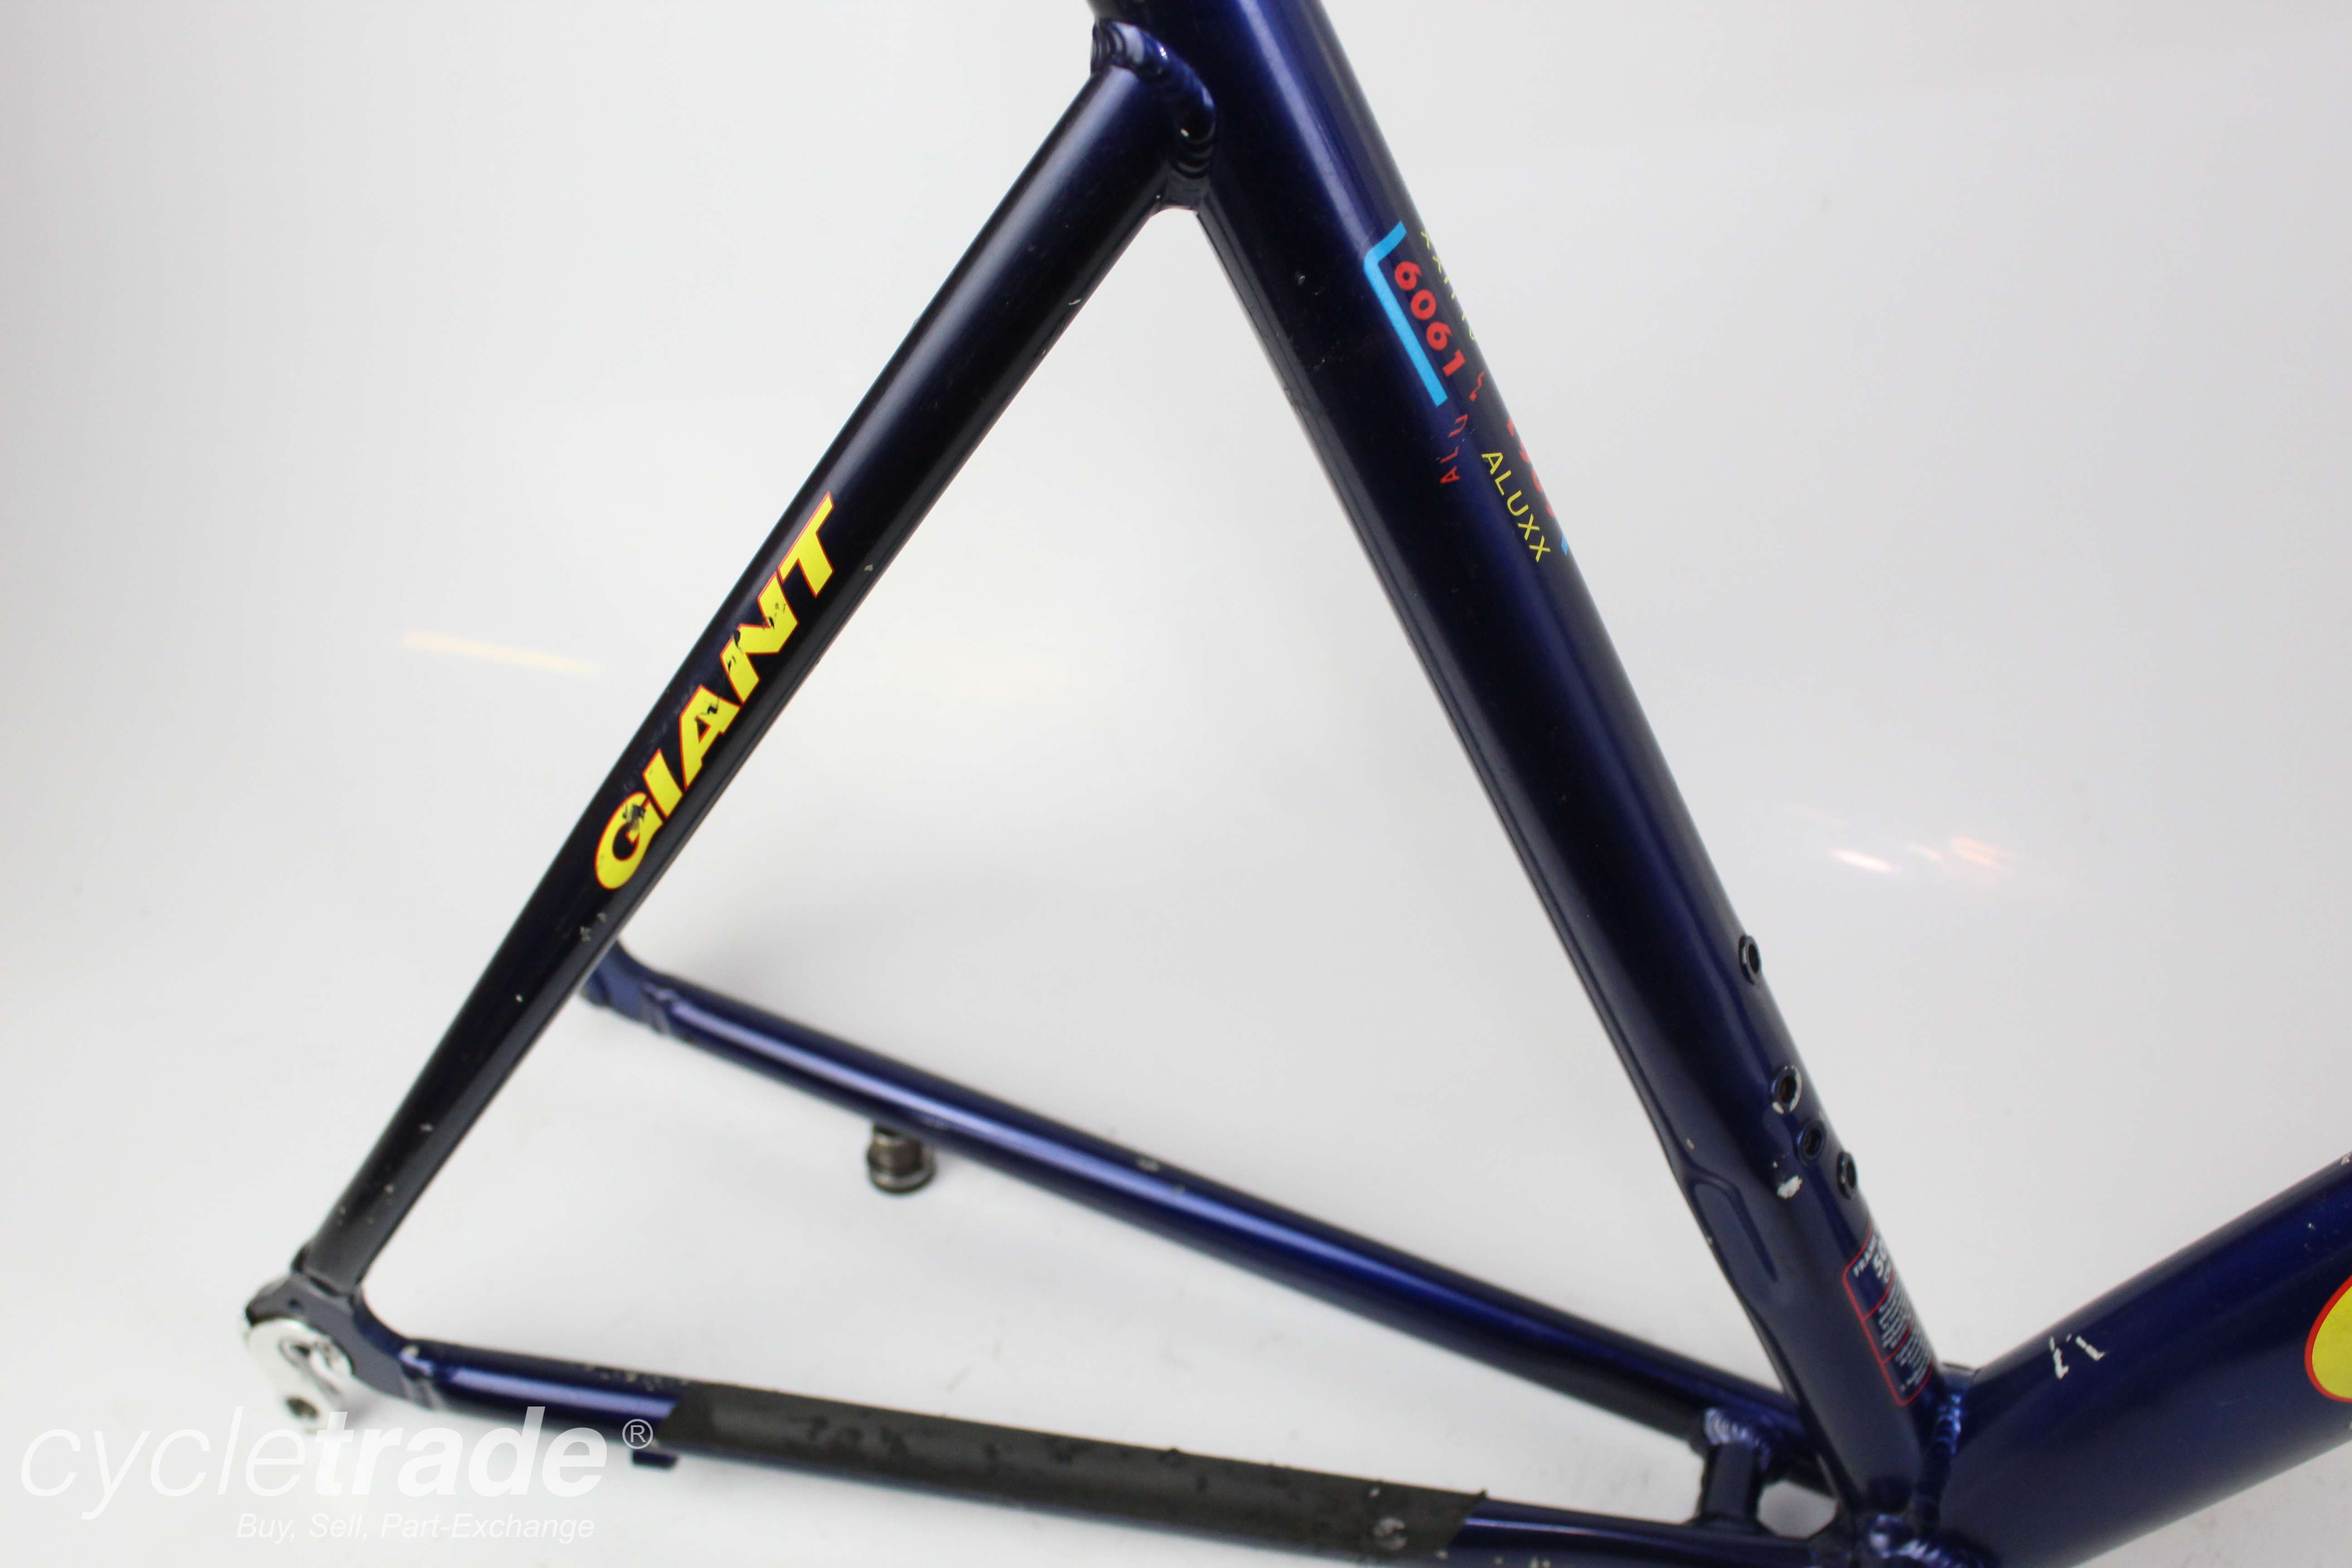 Road Bike Frame - Giant OCR 700c 50cm Rim Brake - Grade C